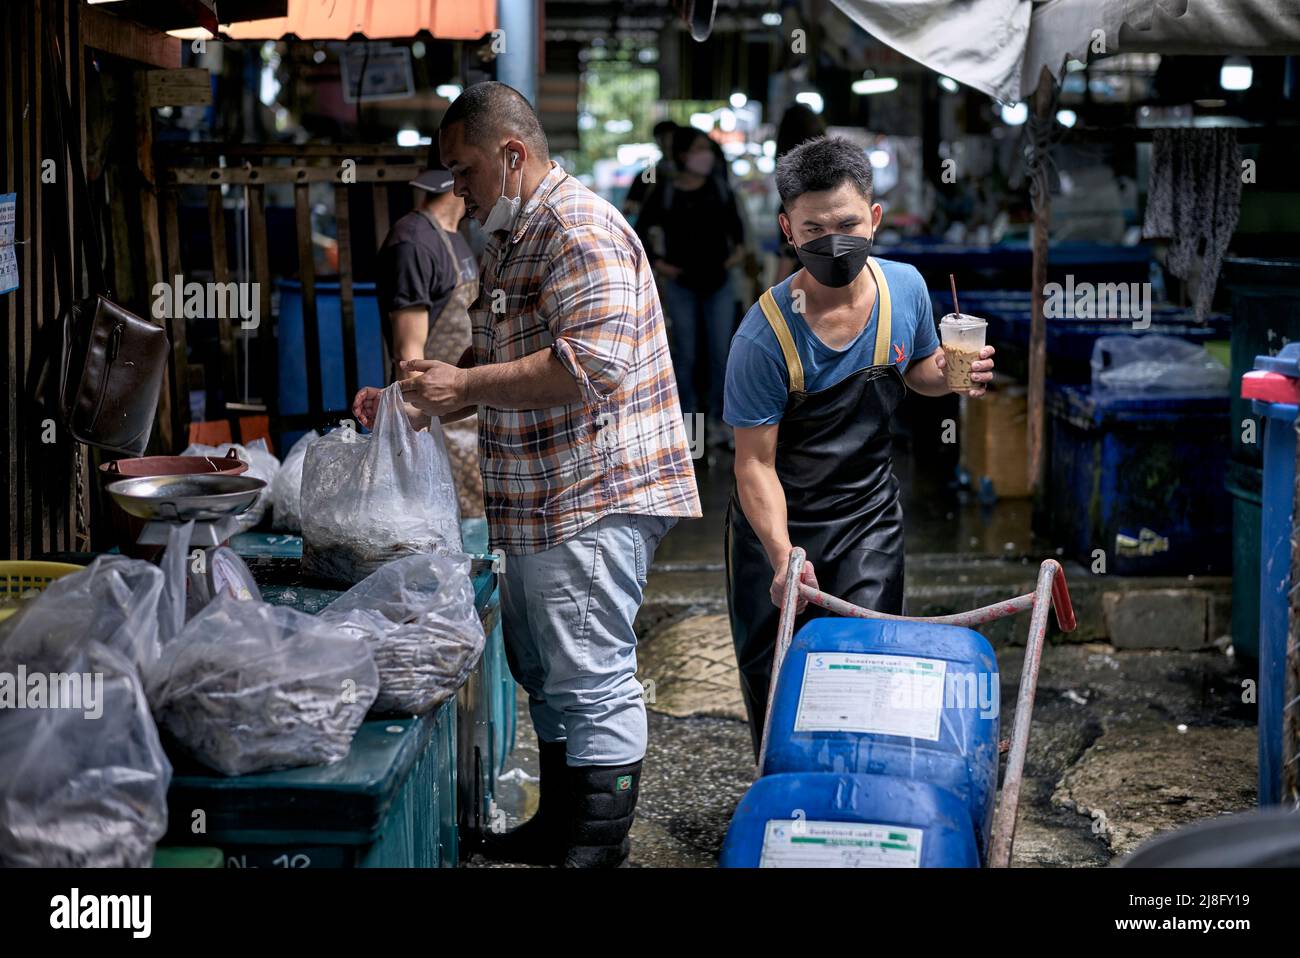 Thailand market people at work. Stock Photo